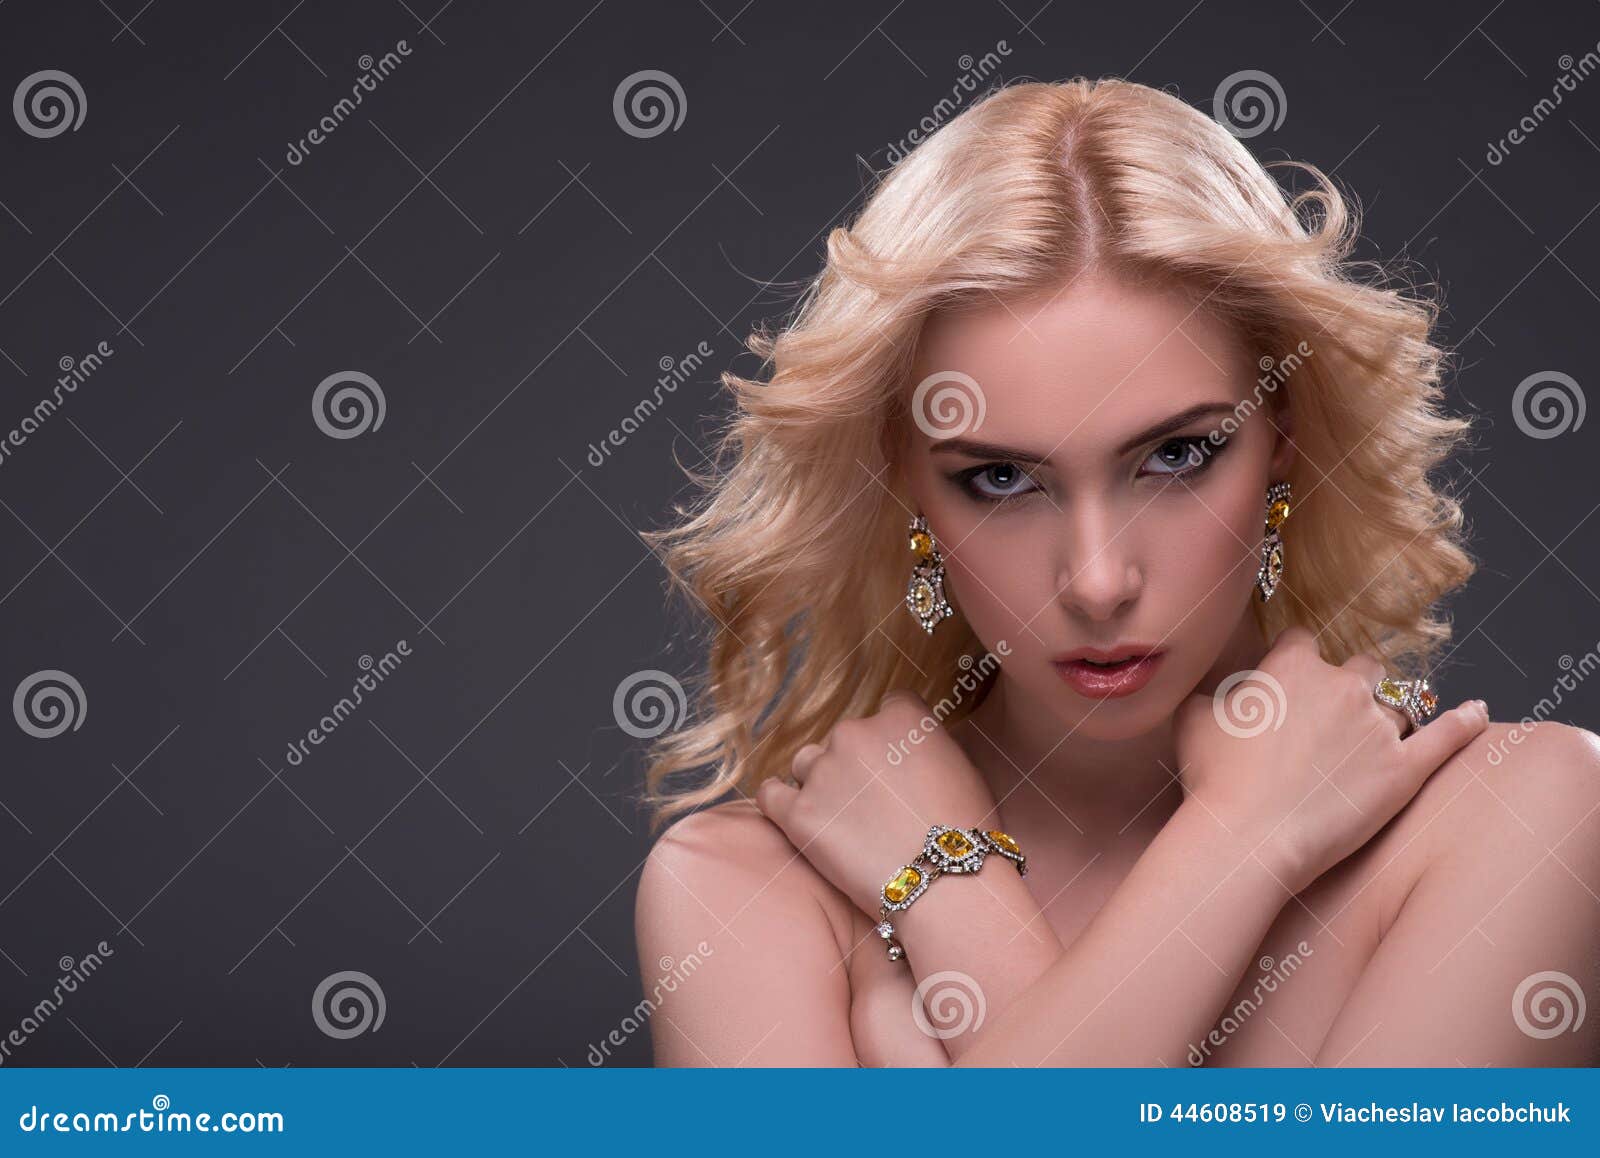 Blonde Hair Jewelry - wide 5